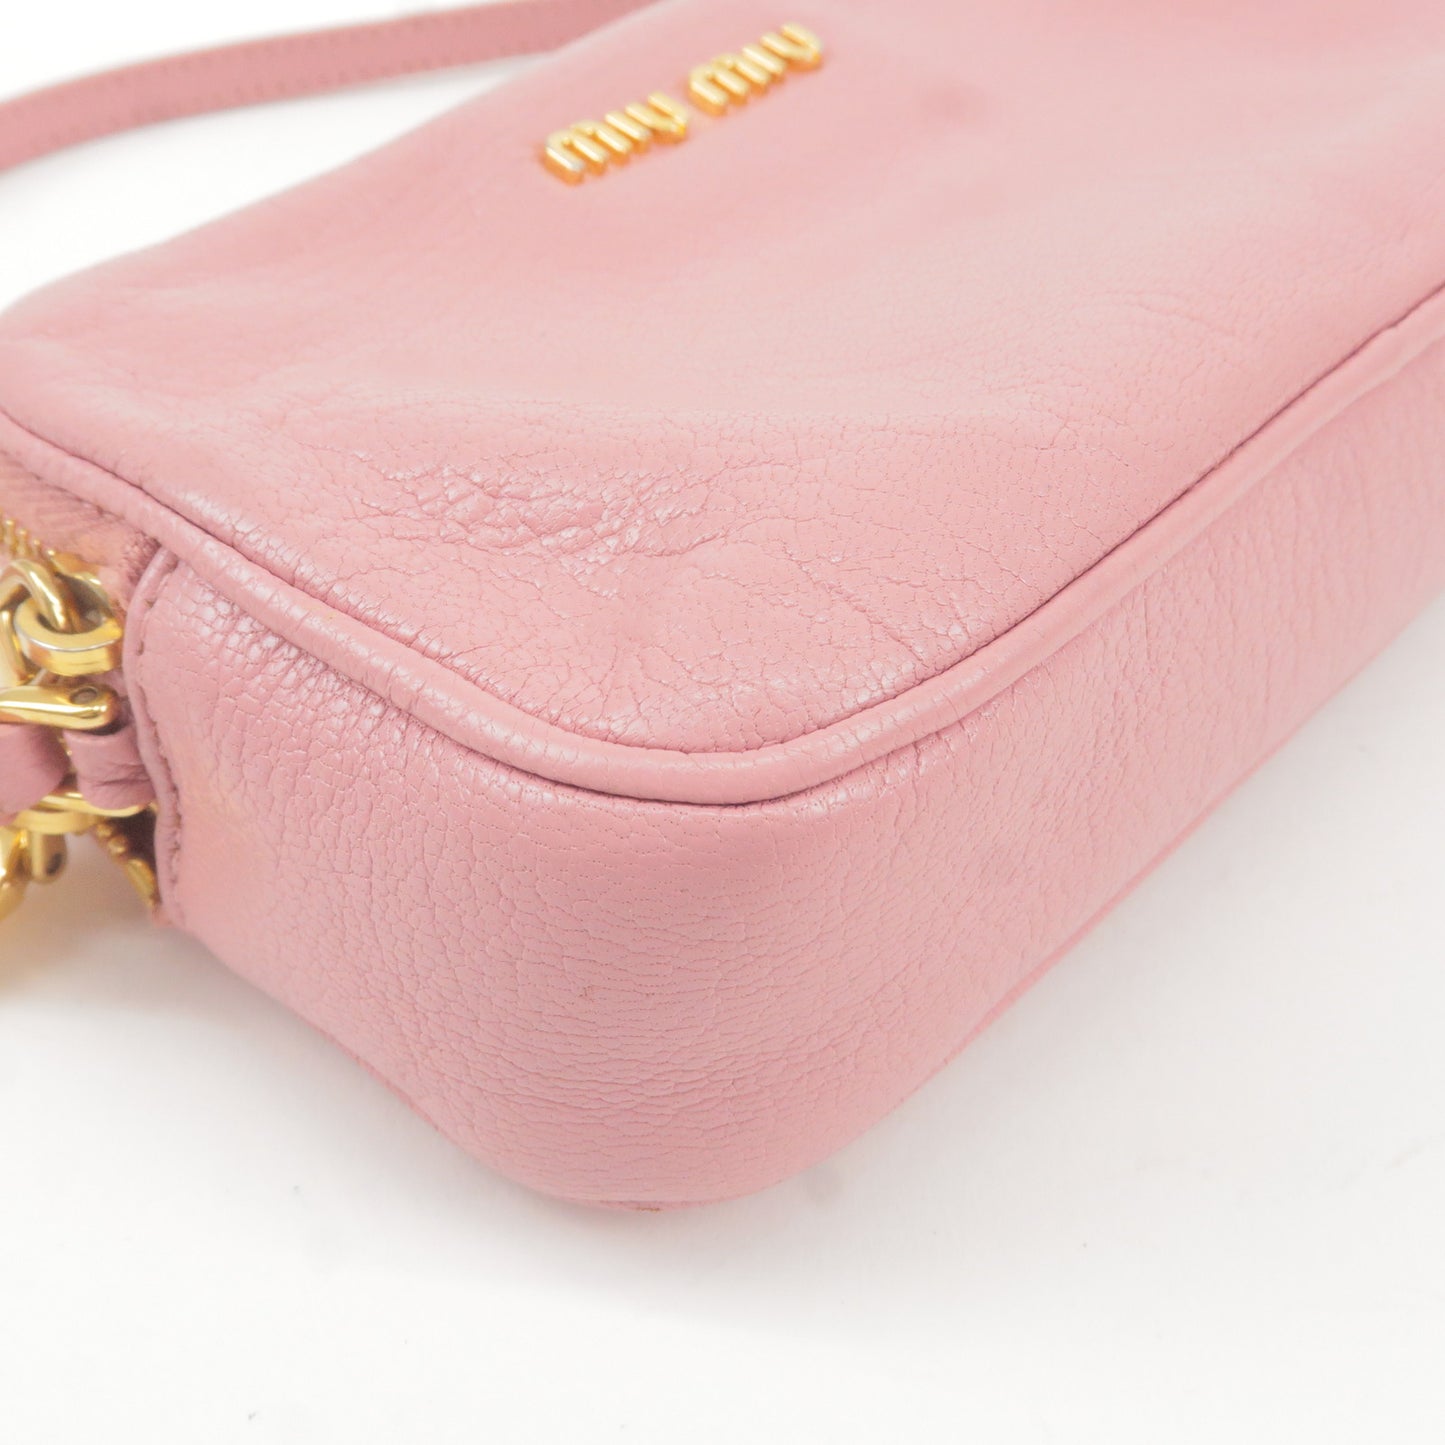 MIU MIU Leather Hand Bag Pouch Purse Pink